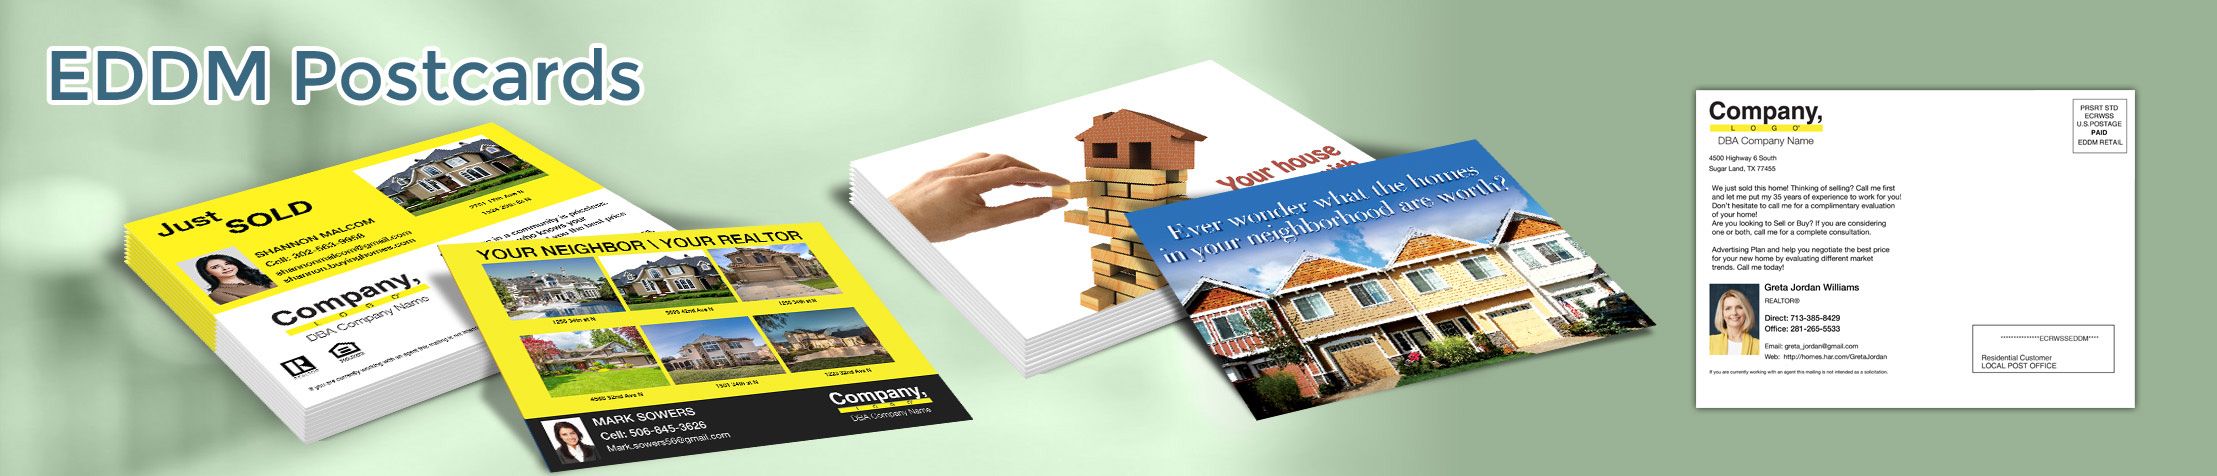 Weichert Real Estate EDDM Postcards - personalized Every Door Direct Mail Postcards | BestPrintBuy.com